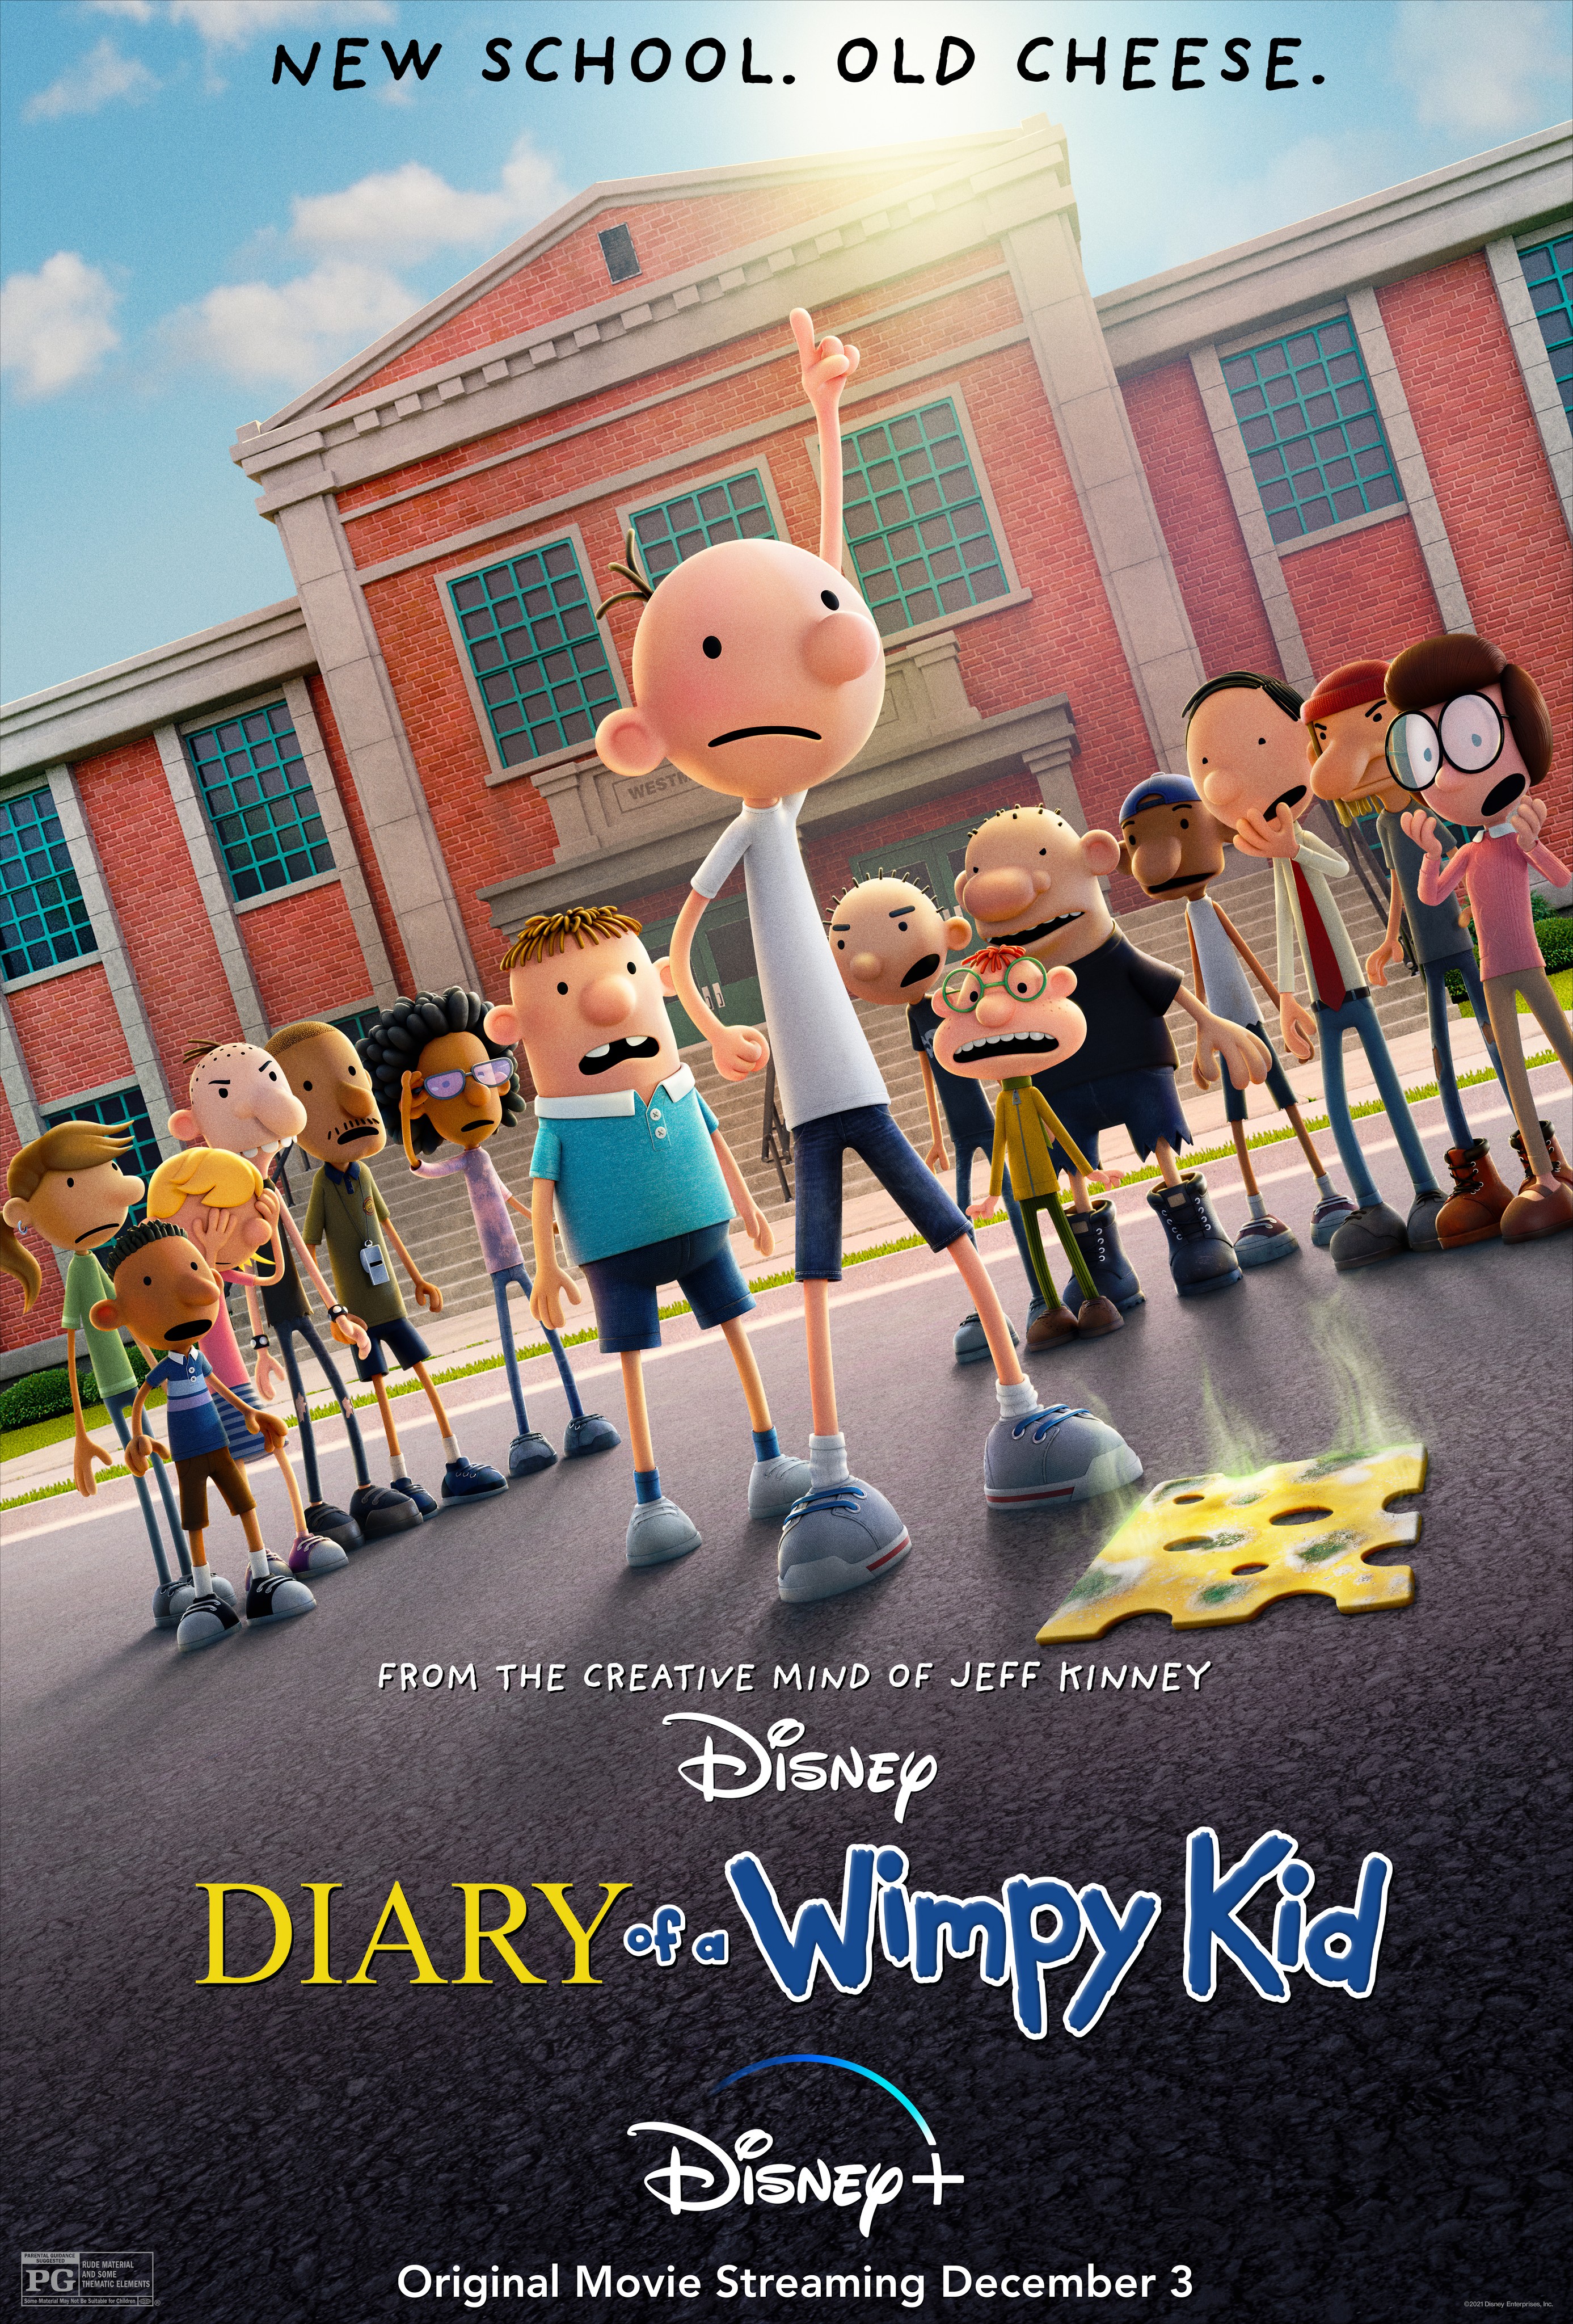 The Wimpy Kid Movie Diary (Diary of a Wimpy Kid): Kinney, Jeff